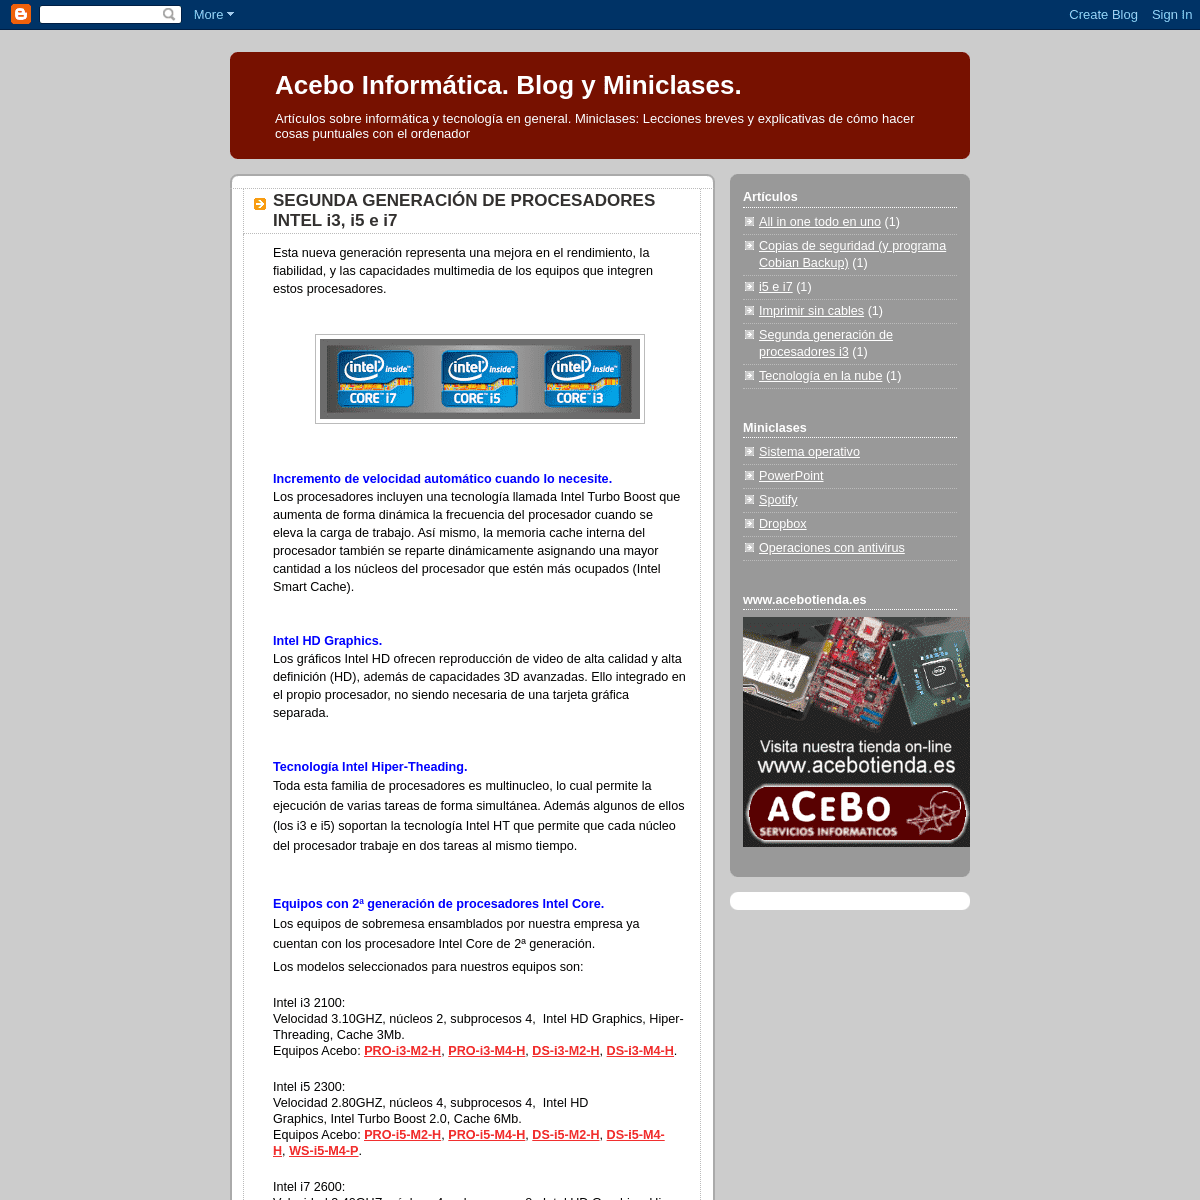 A complete backup of aceboinformatica.blogspot.com